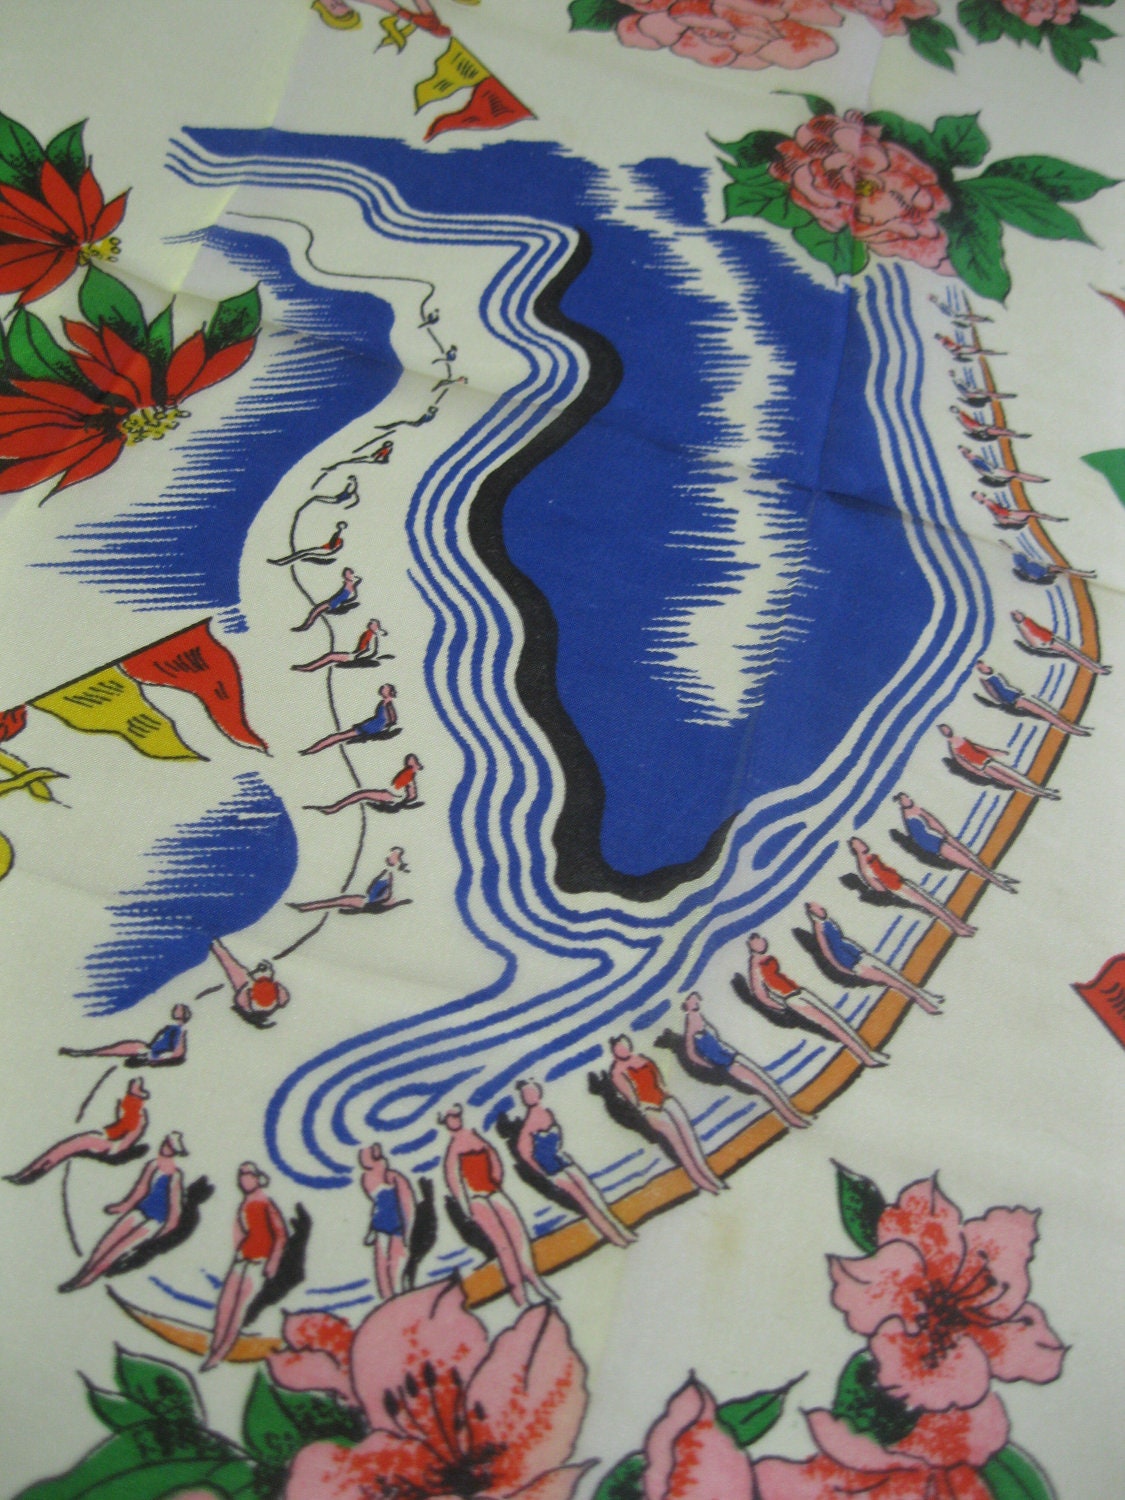 Vintage Florida handkerchief, Cypress Gardens hankie, Esther Williams pool, 1950s